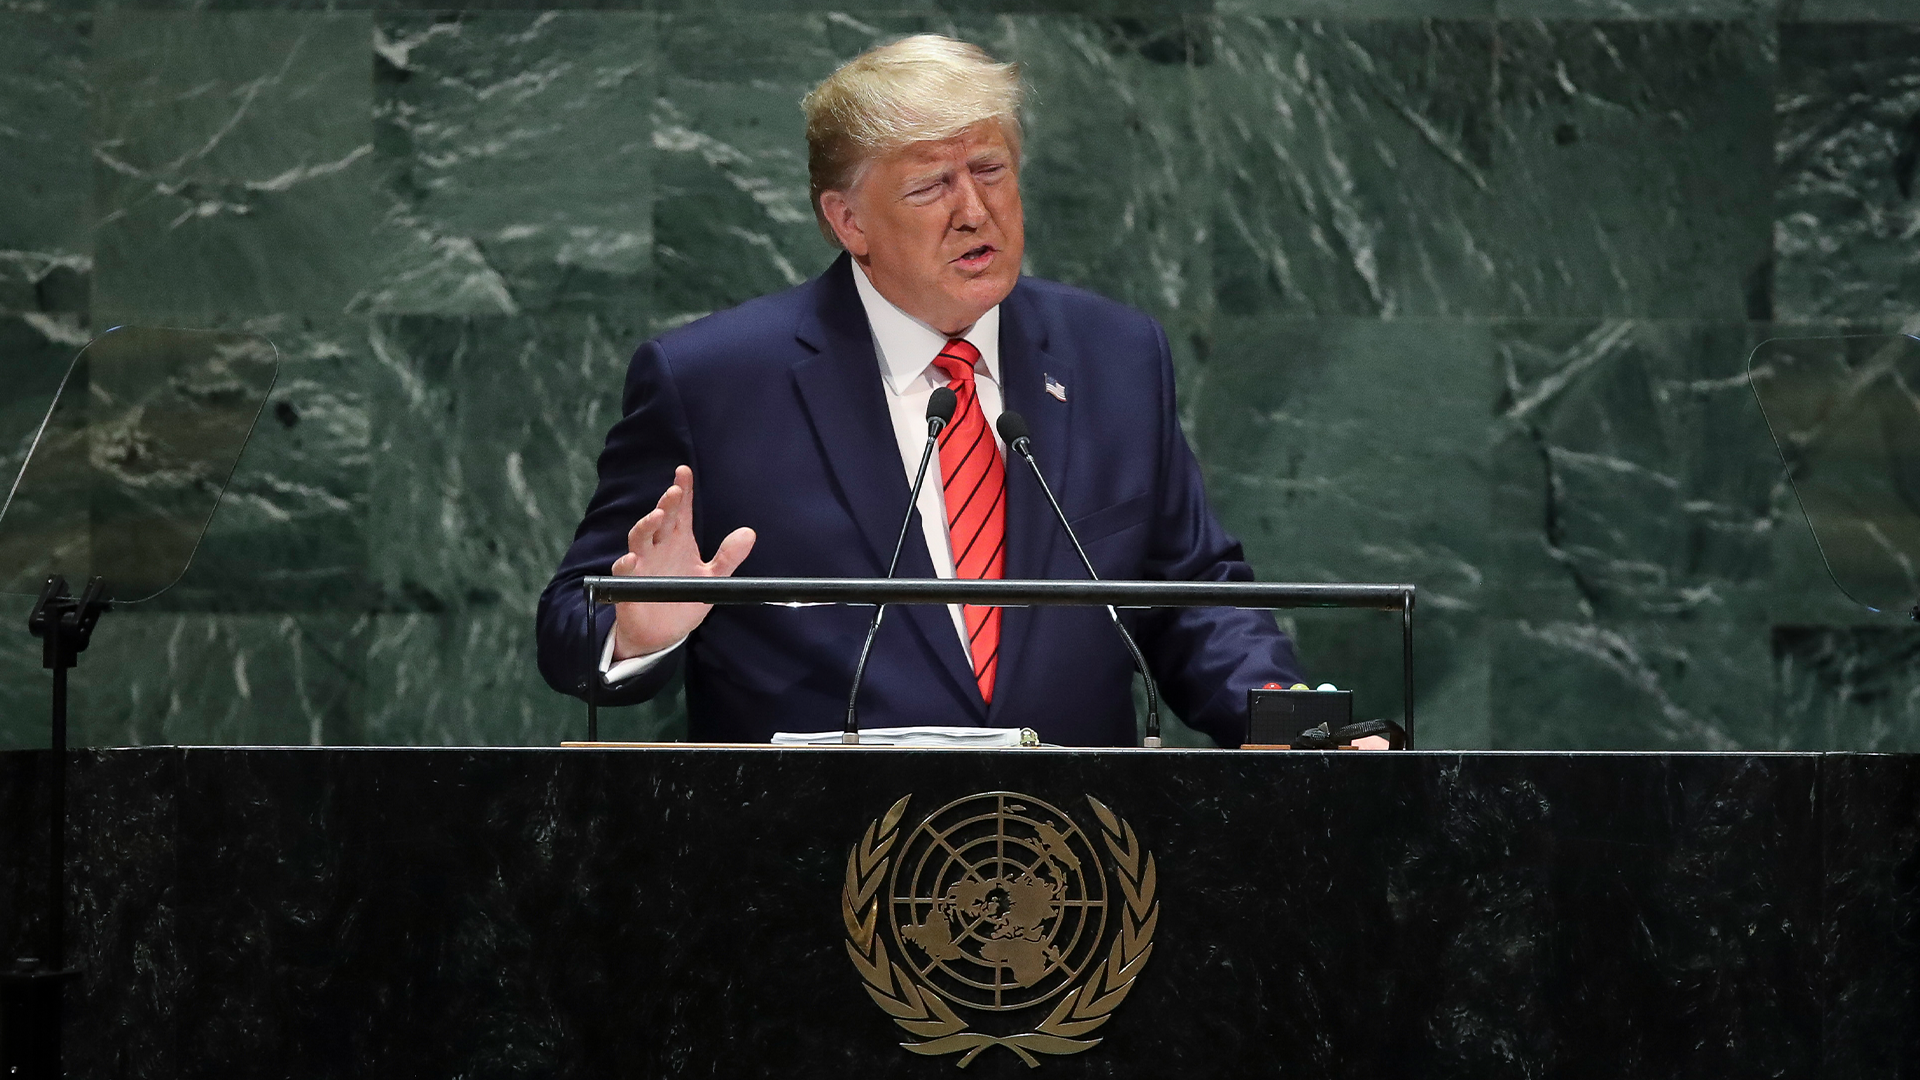 Trump U.N. speech: Full video and annotations